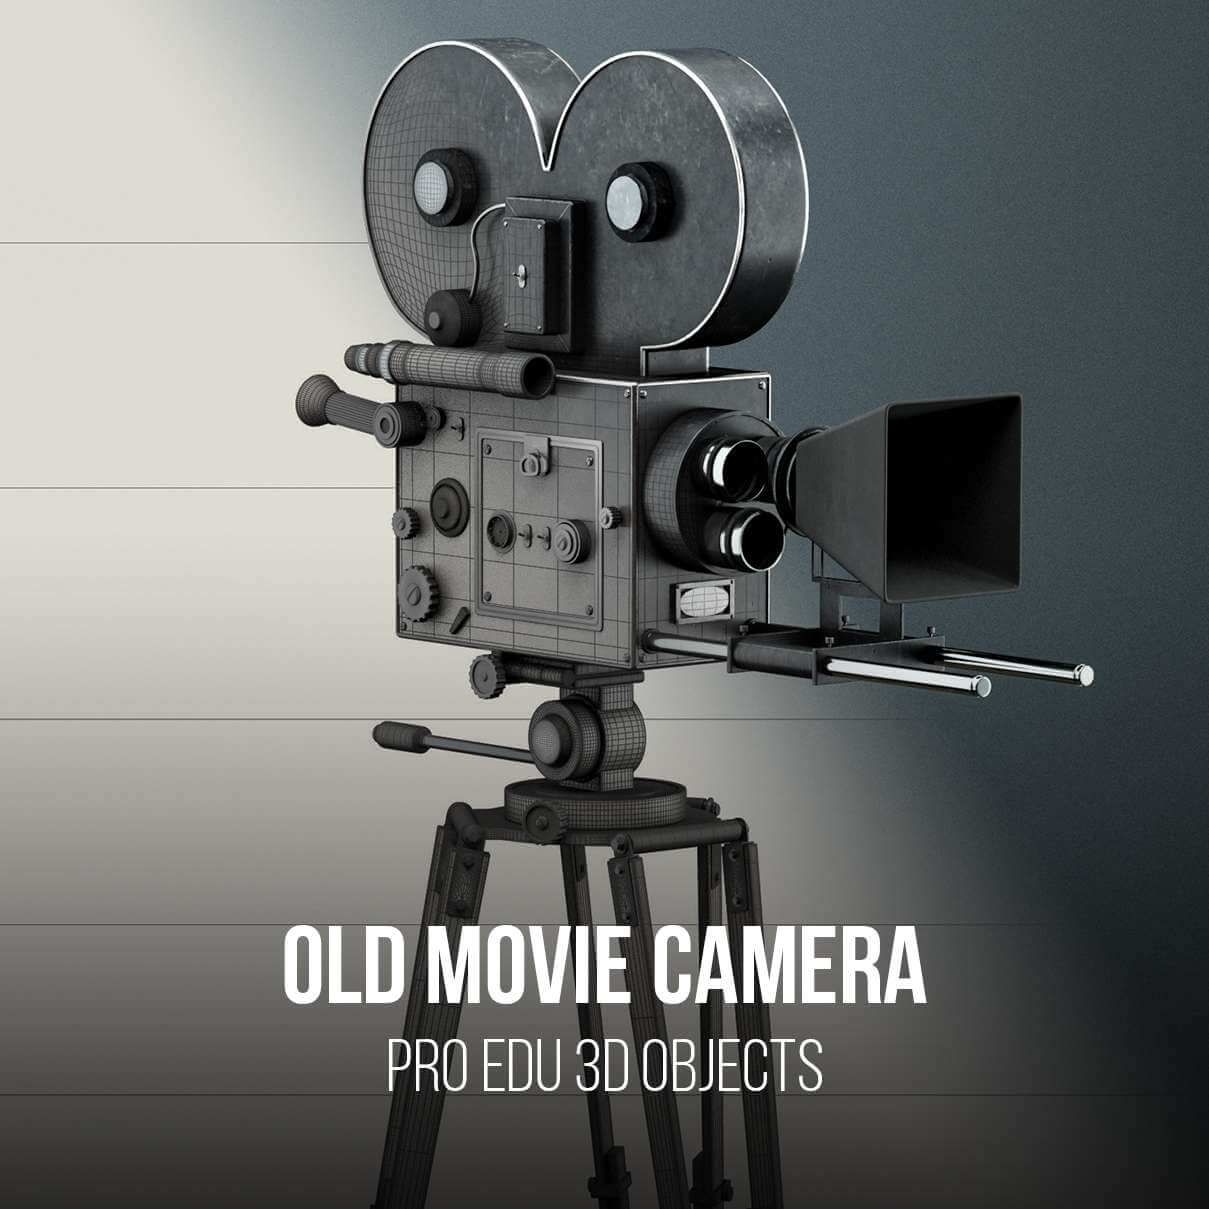 Old Fashioned Movie Camera 3D Model Photoshop | C4D FBX OBJ CGI  PRO EDU PRO EDU